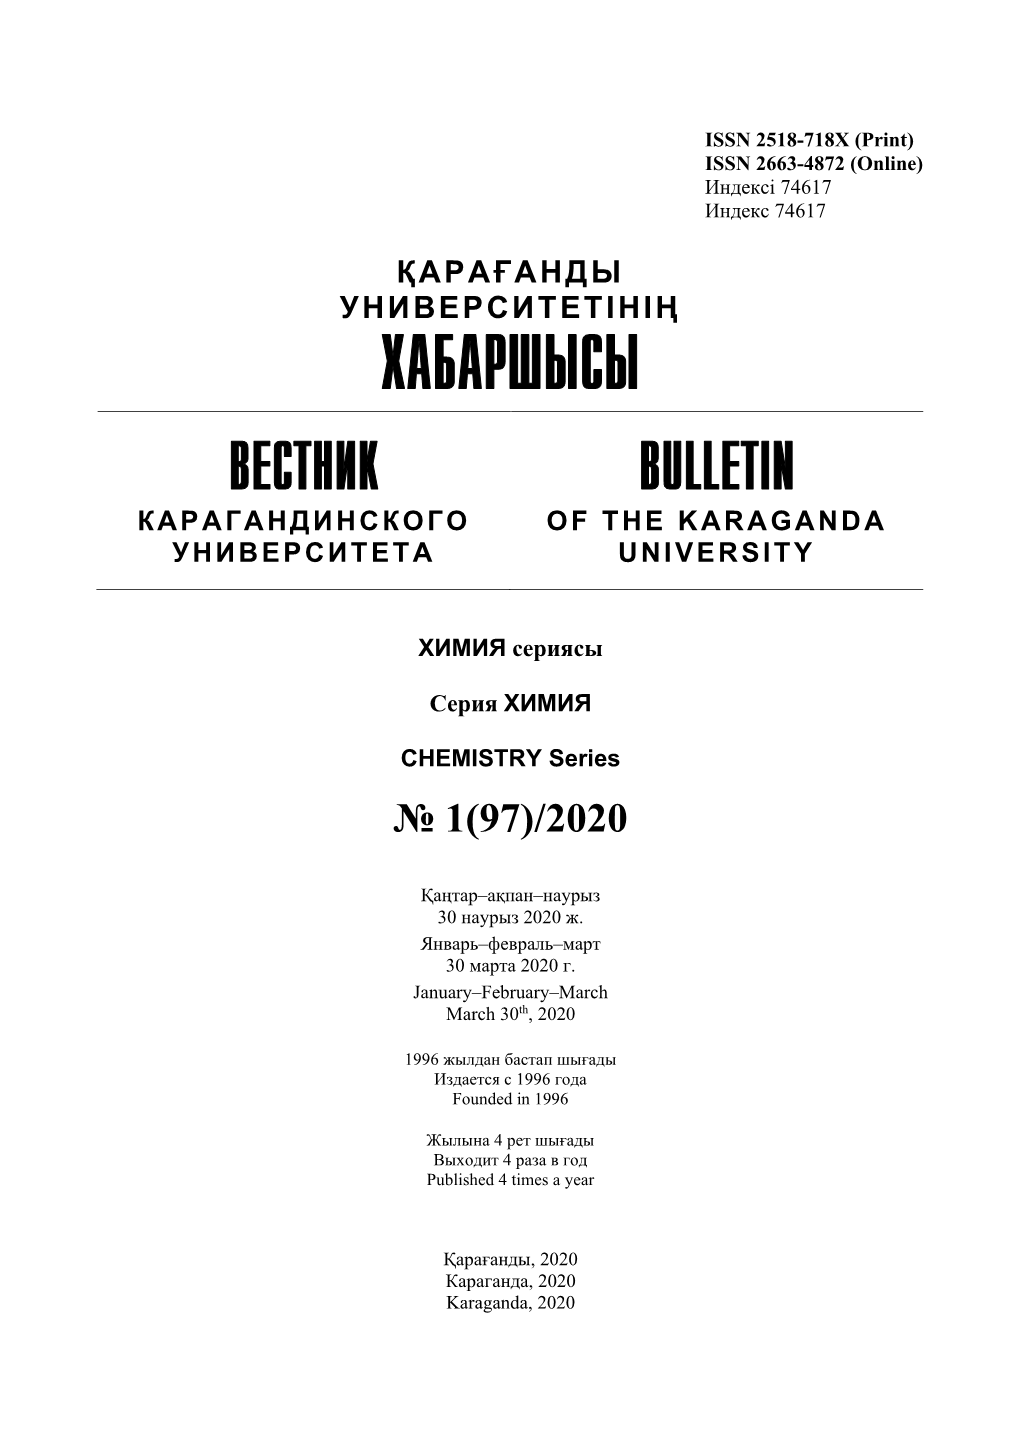 Хабаршысы Вестник Bulletin Карагандинского of the Karaganda Университета University